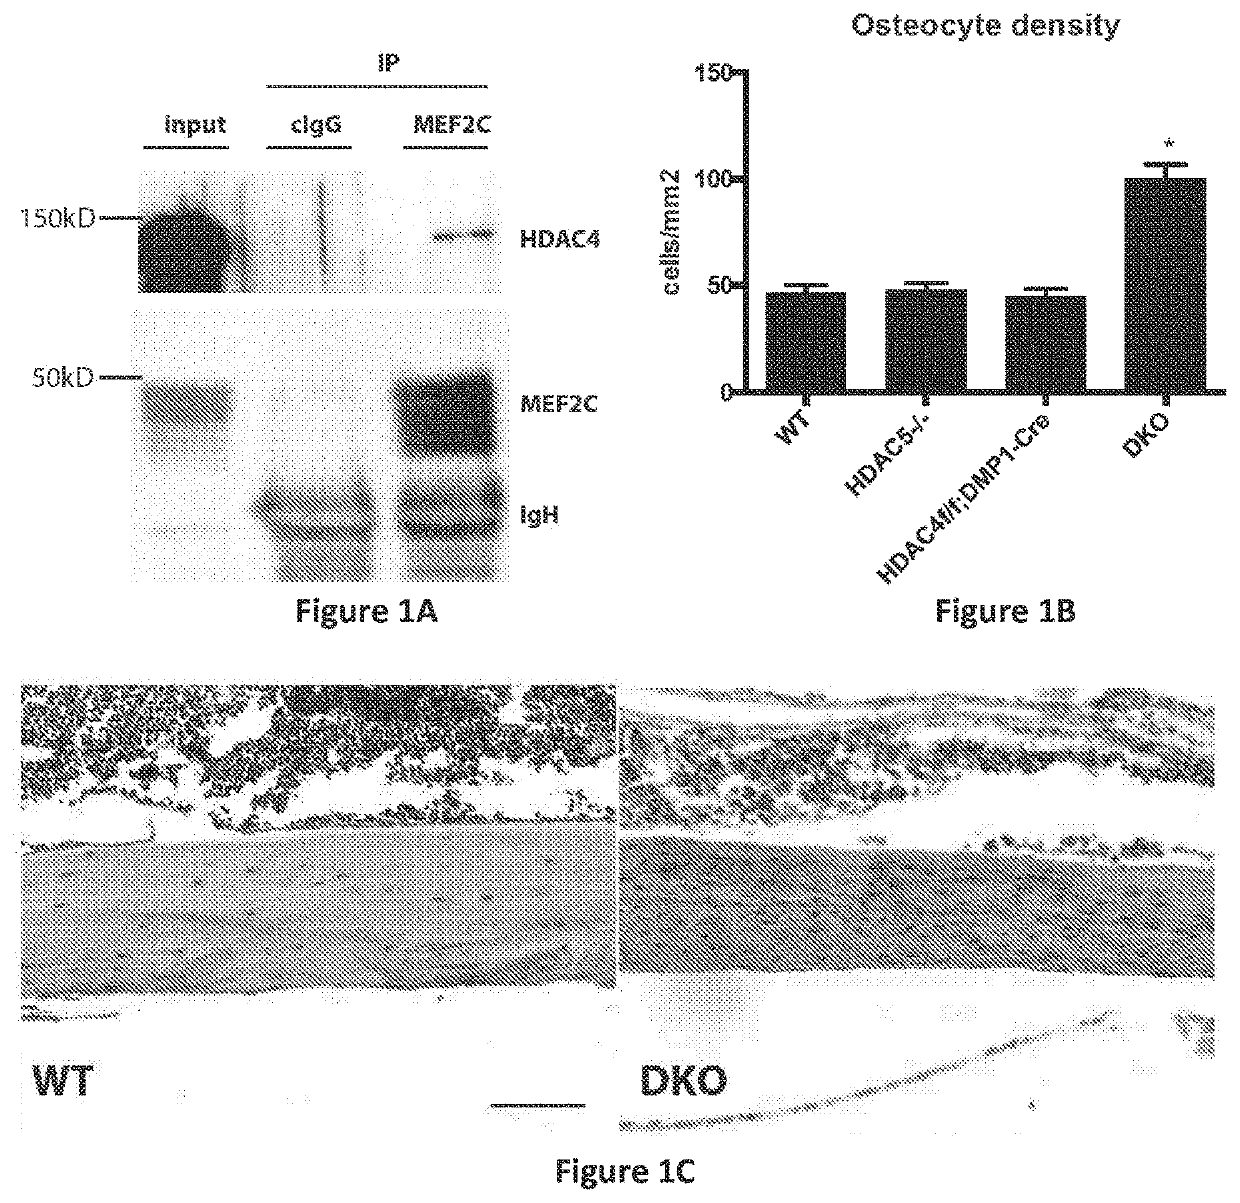 Uses of salt-inducible kinase (SIK) inhibitors for treating osteoporosis